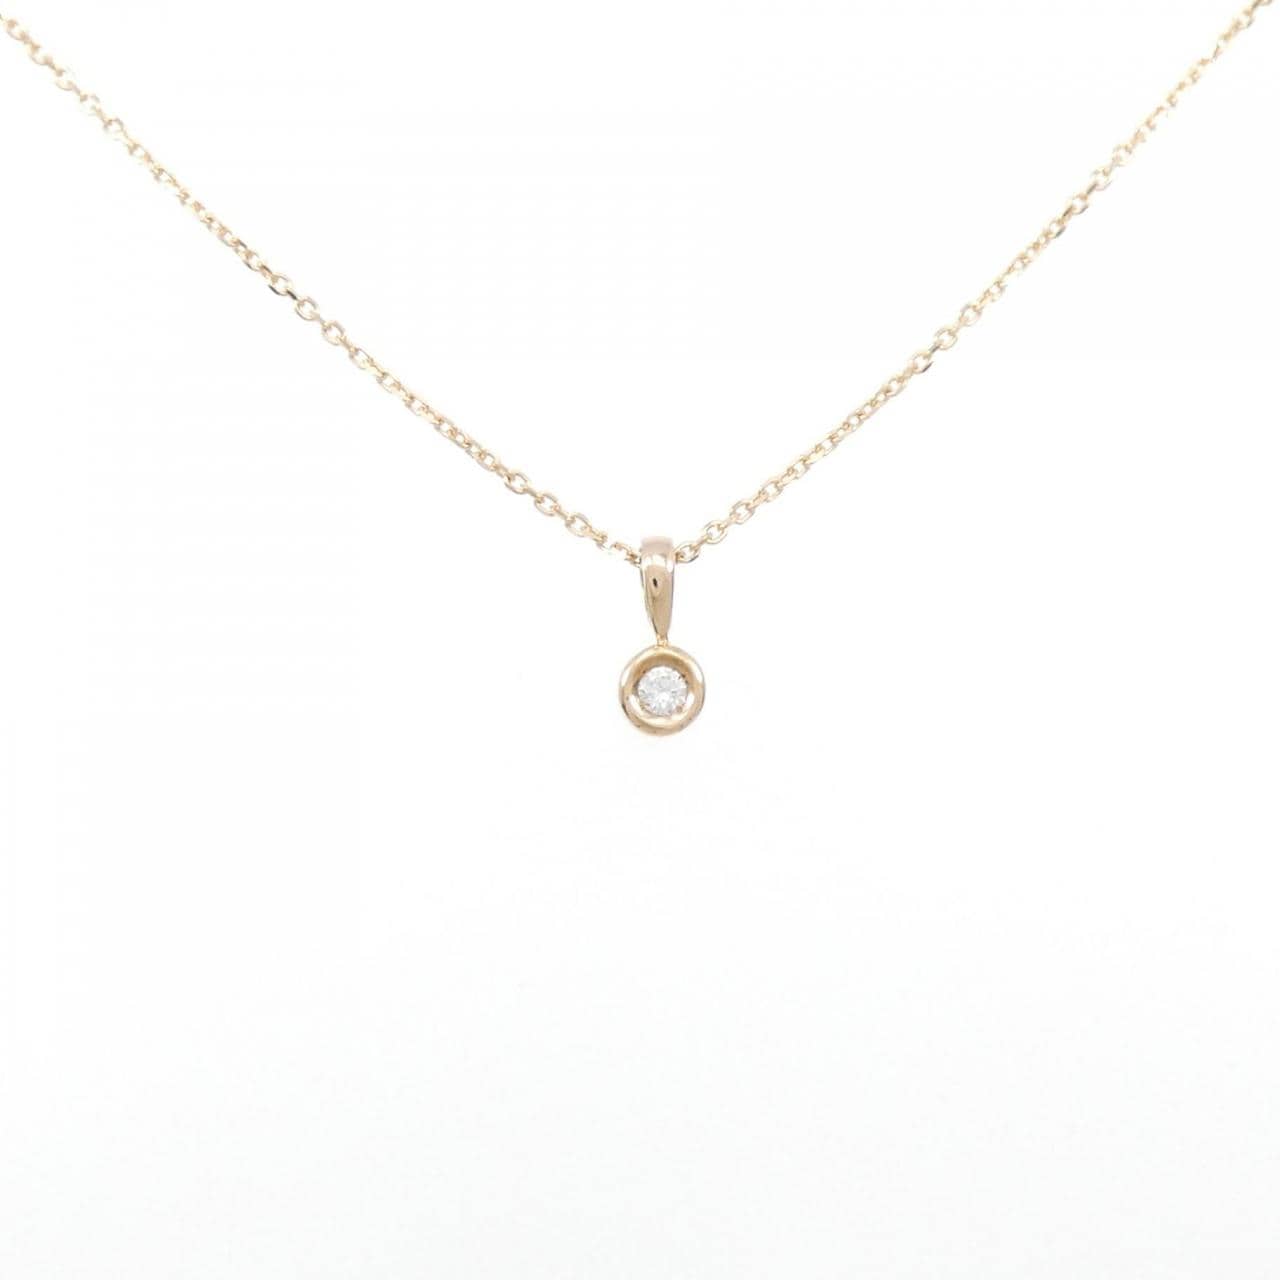 750PG/K18PG Diamond necklace 0.03CT